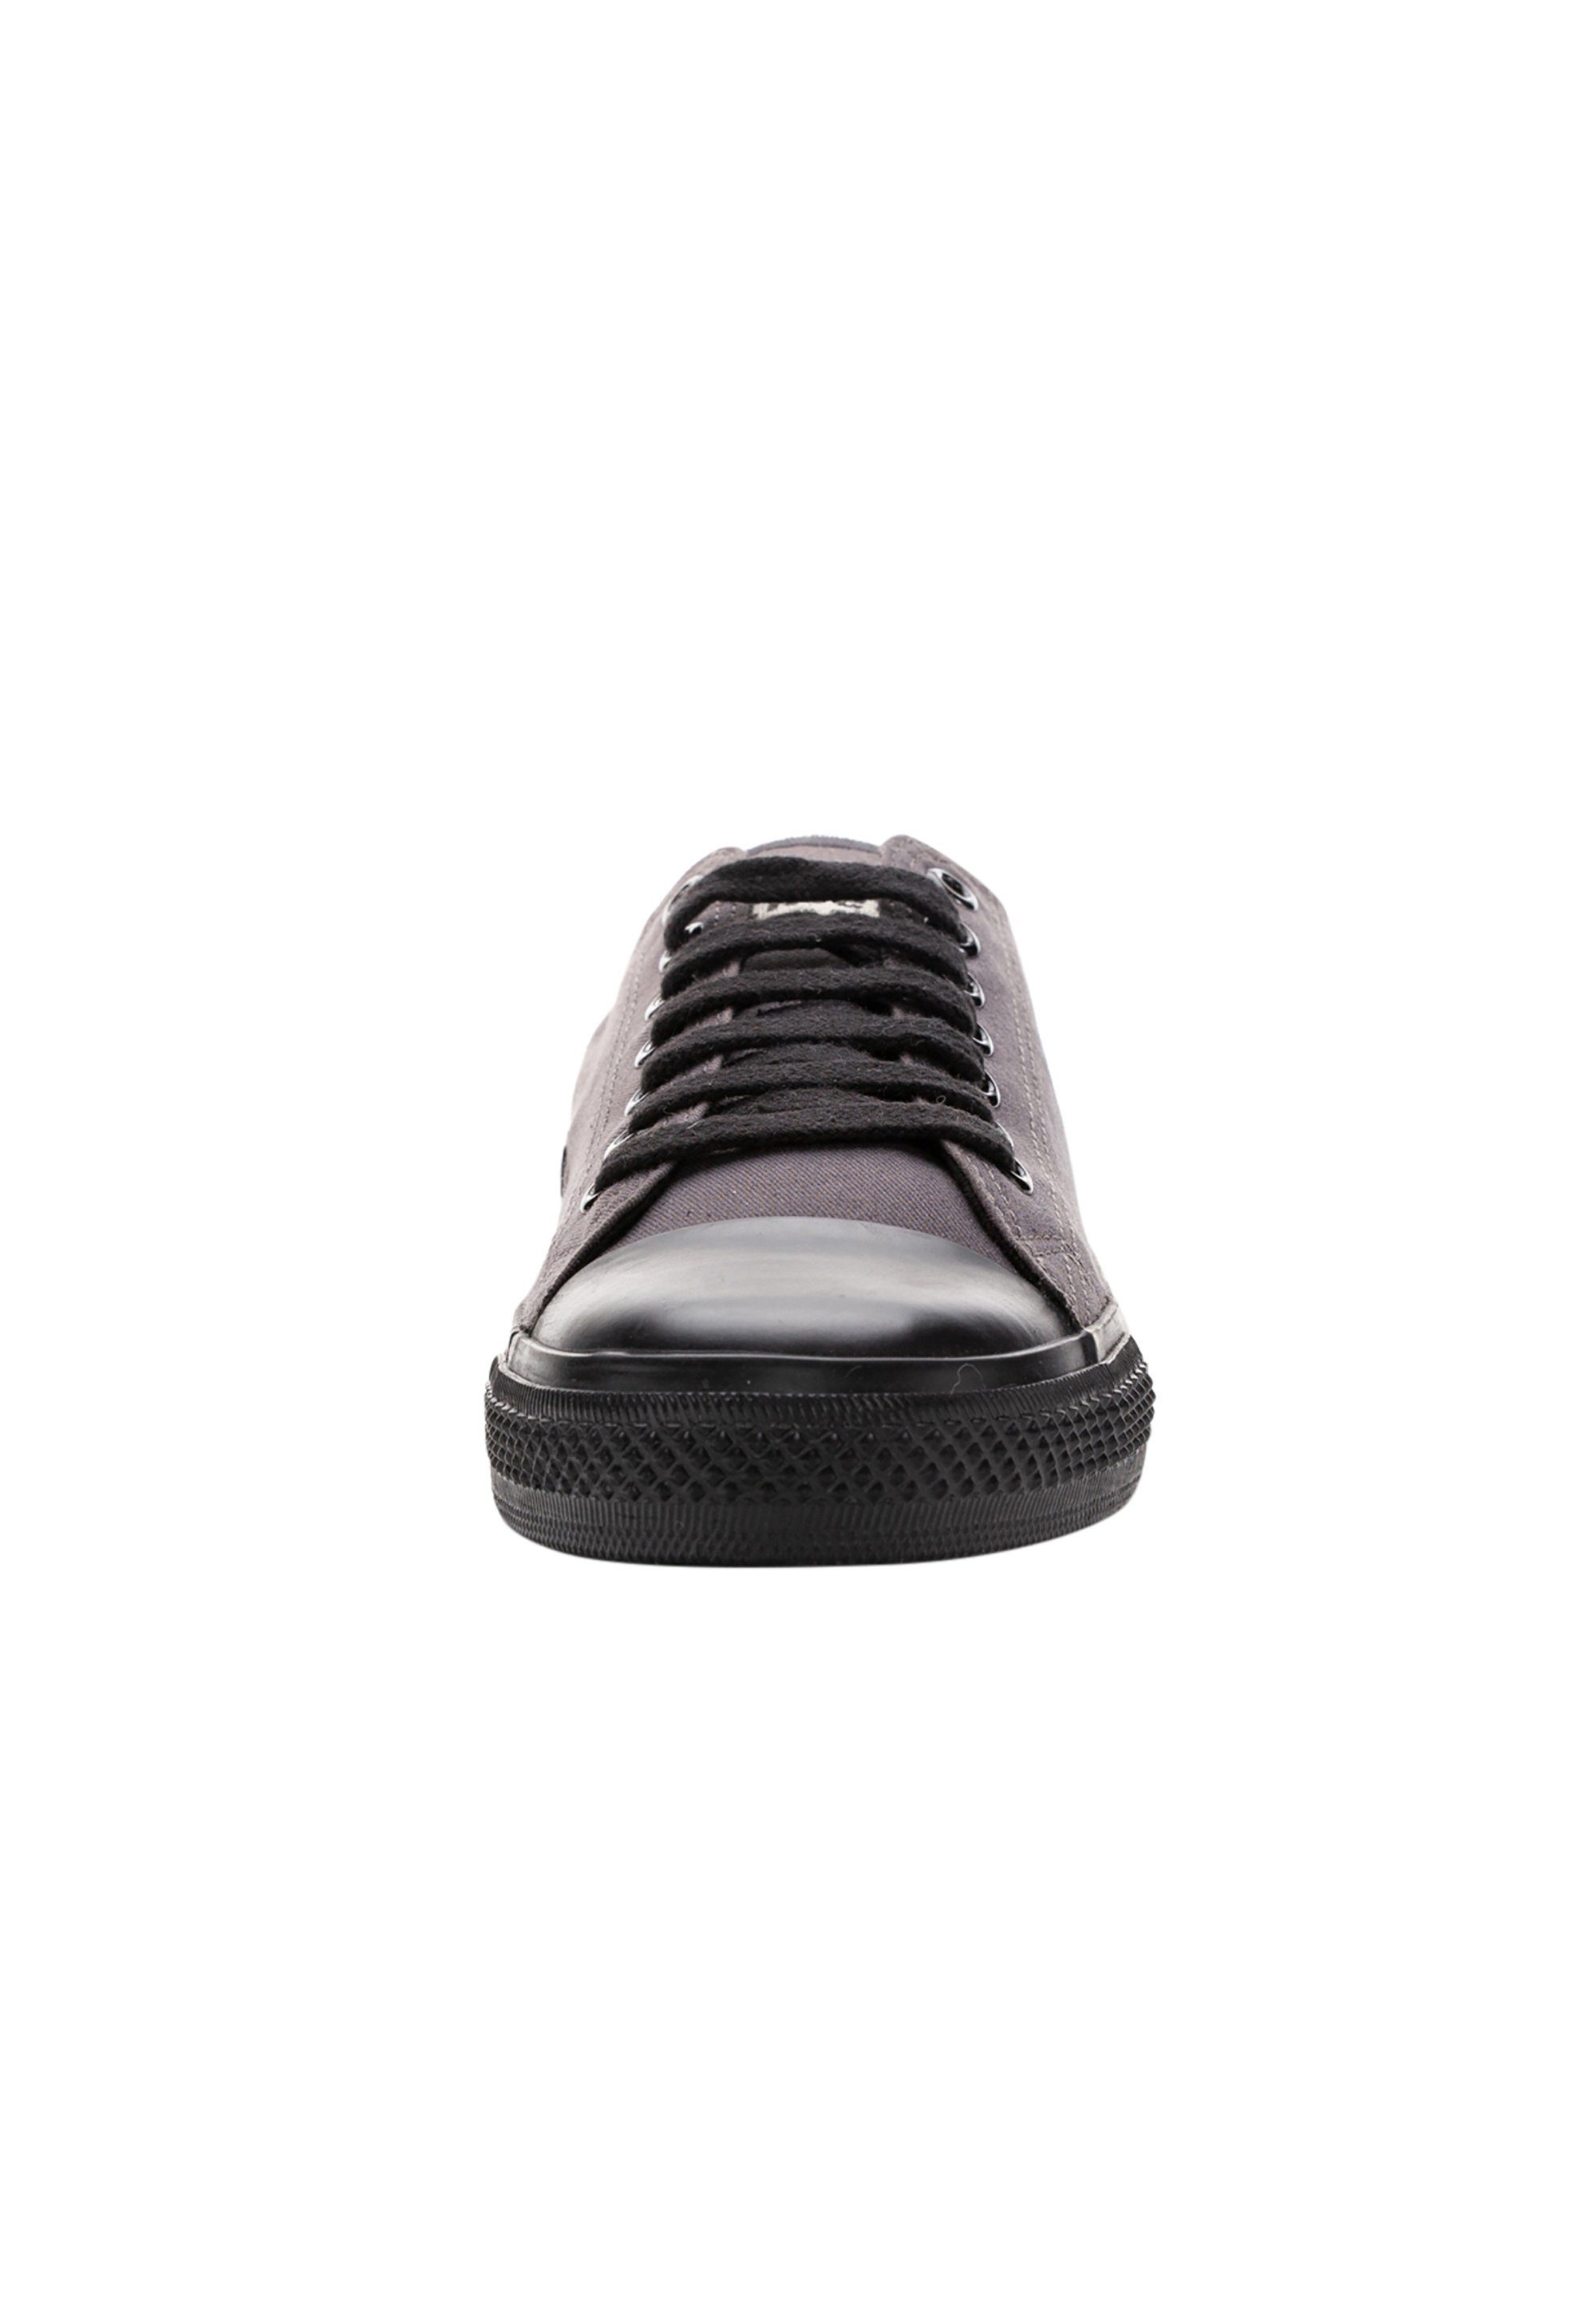 ETHLETIC Black Cap Lo Cut black grey pewter - Sneaker jet Fairtrade Produkt